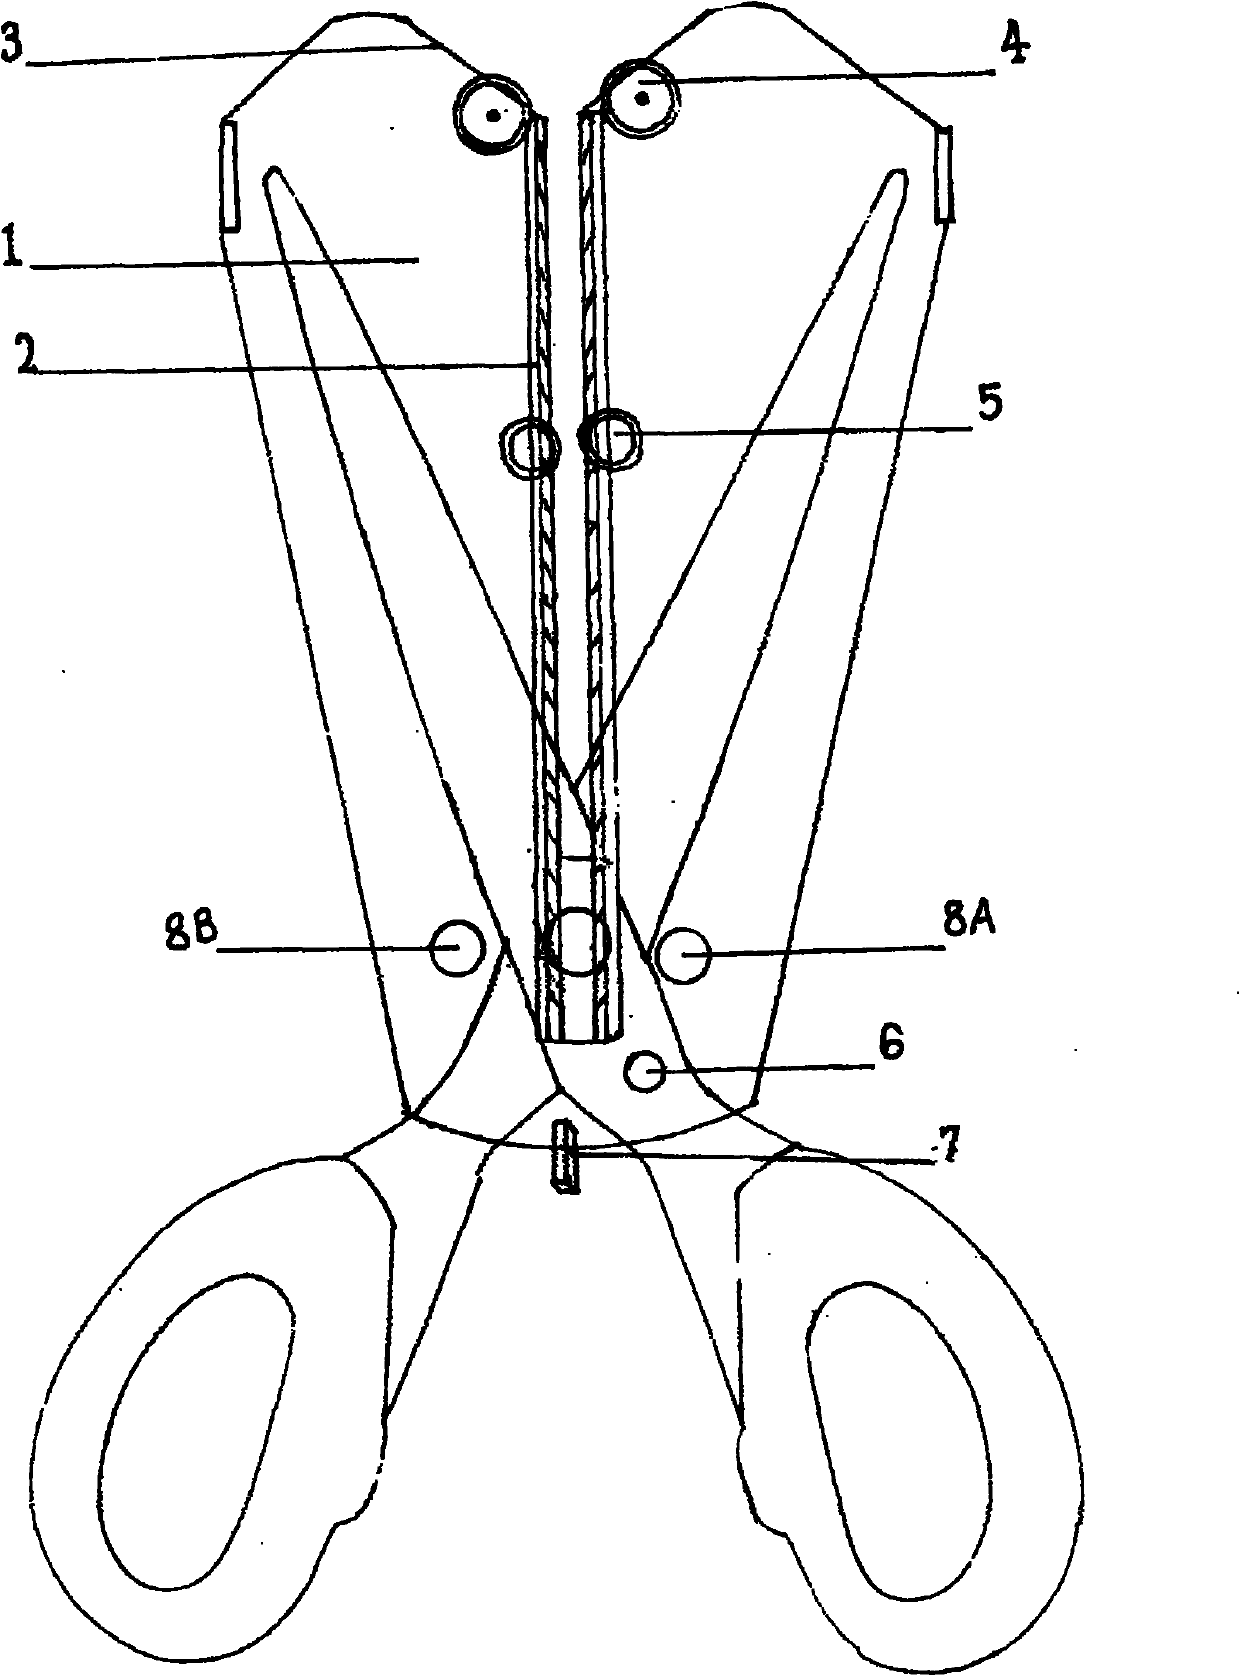 Anti-cutting device for scissors